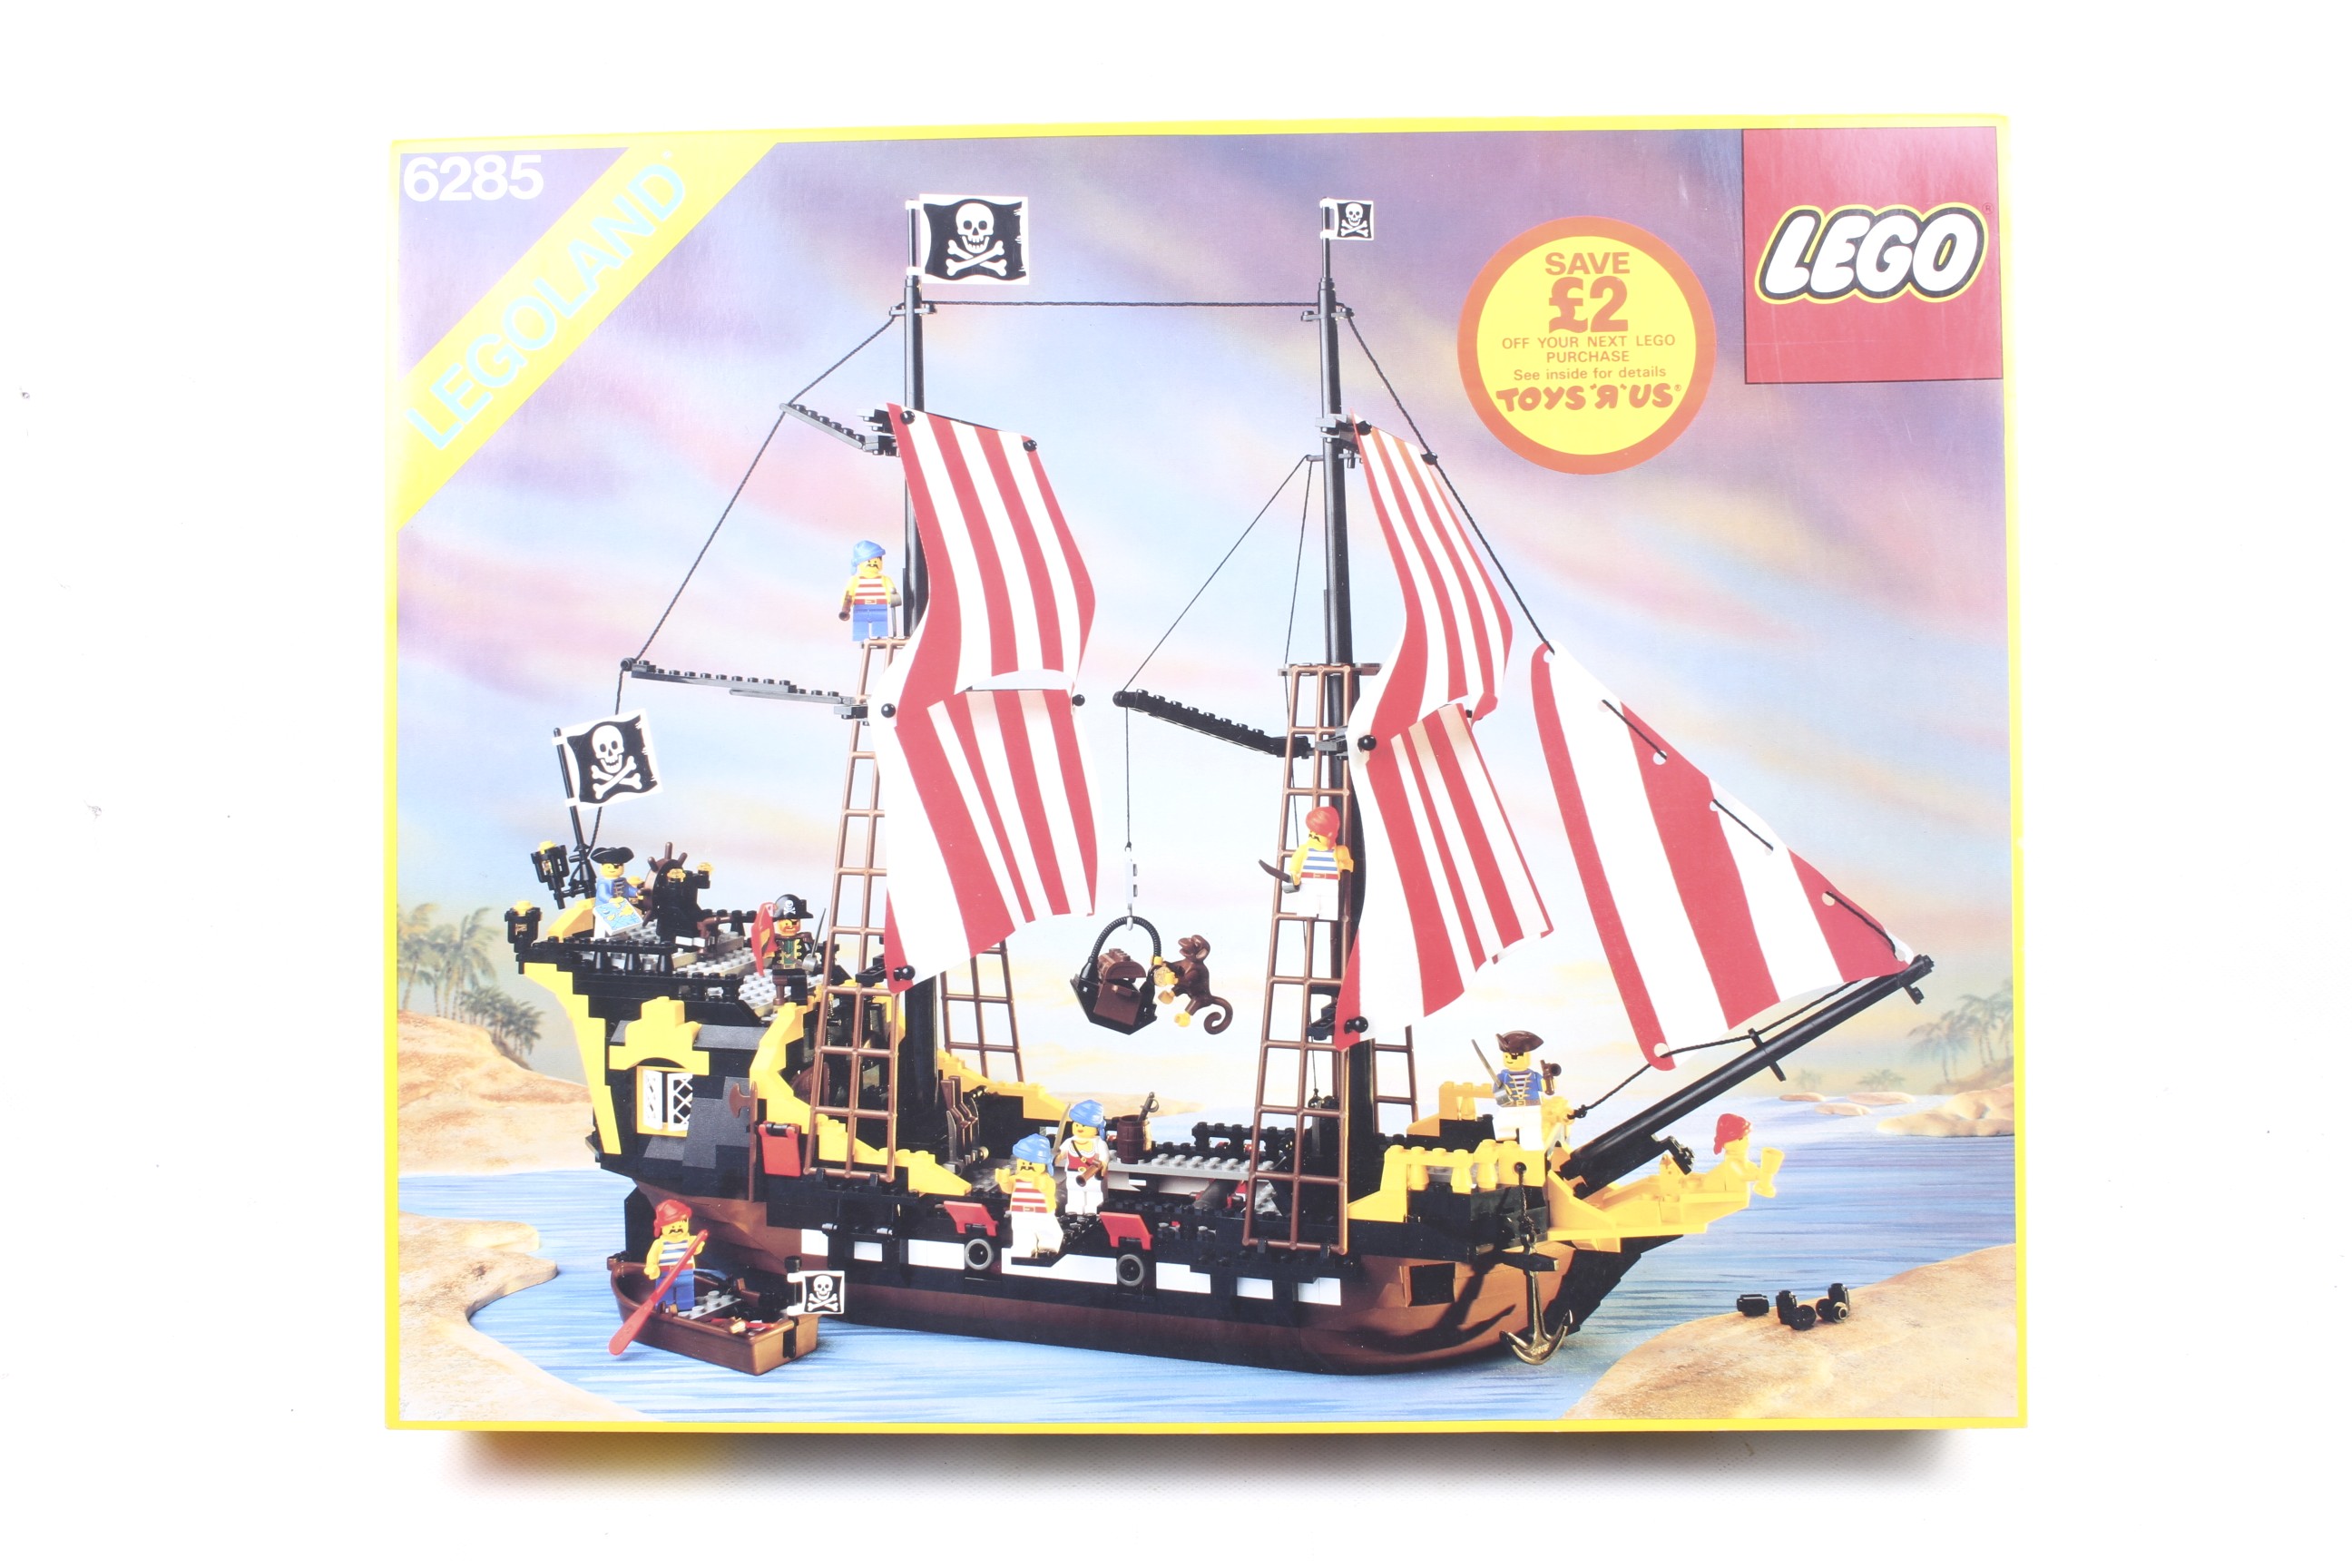 A Lego Black Seas Barracuda Legoland set.